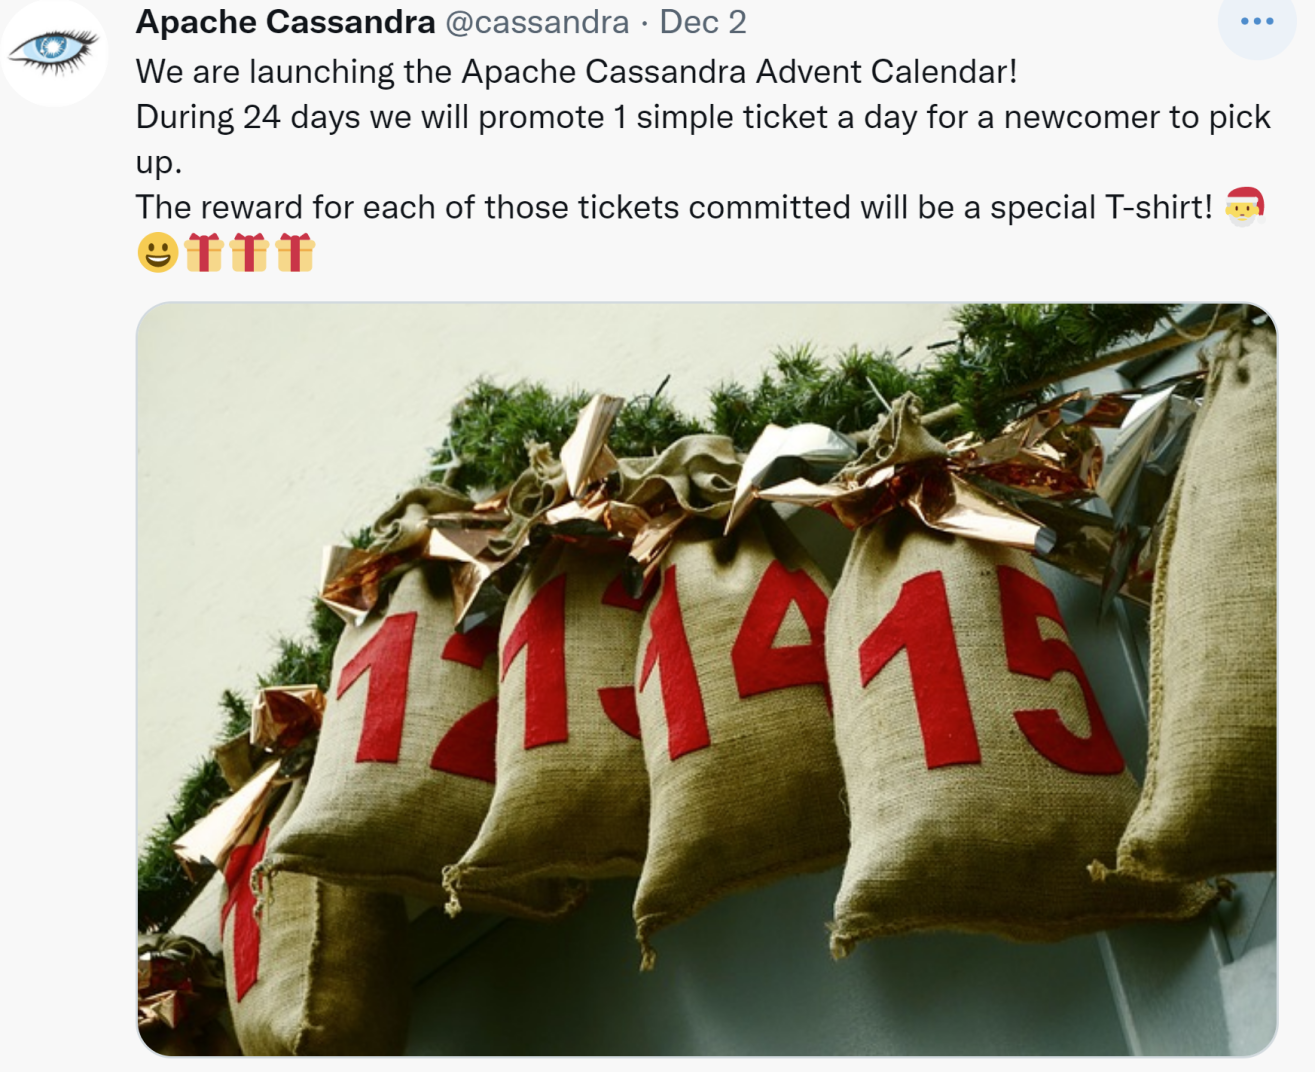 Apache Cassandra’s advent calendar campaign on Twitter